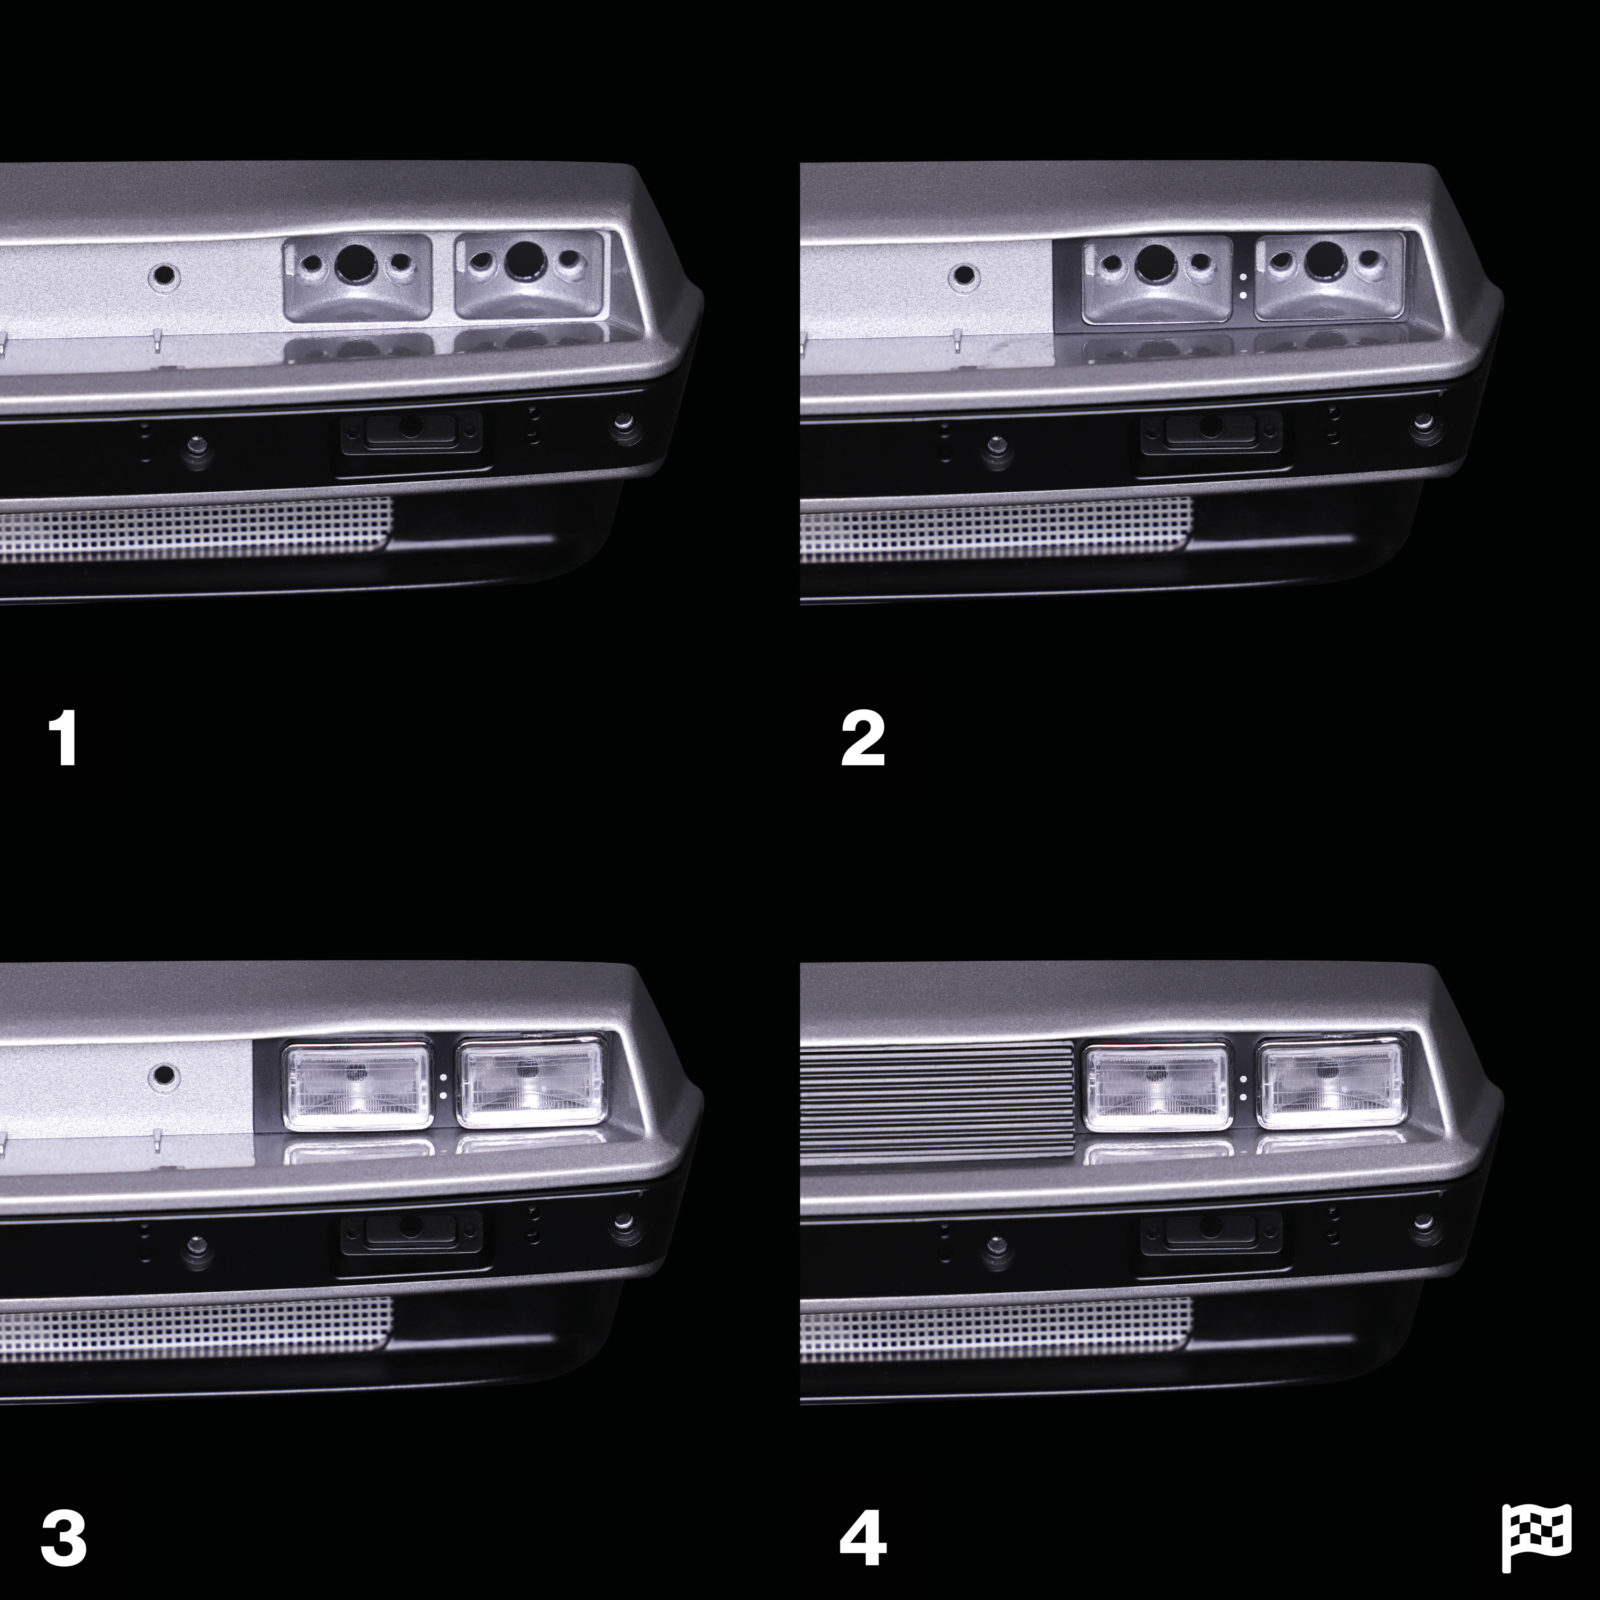 Installation des inserts d'objectif DeLorean étapes 1 à 4